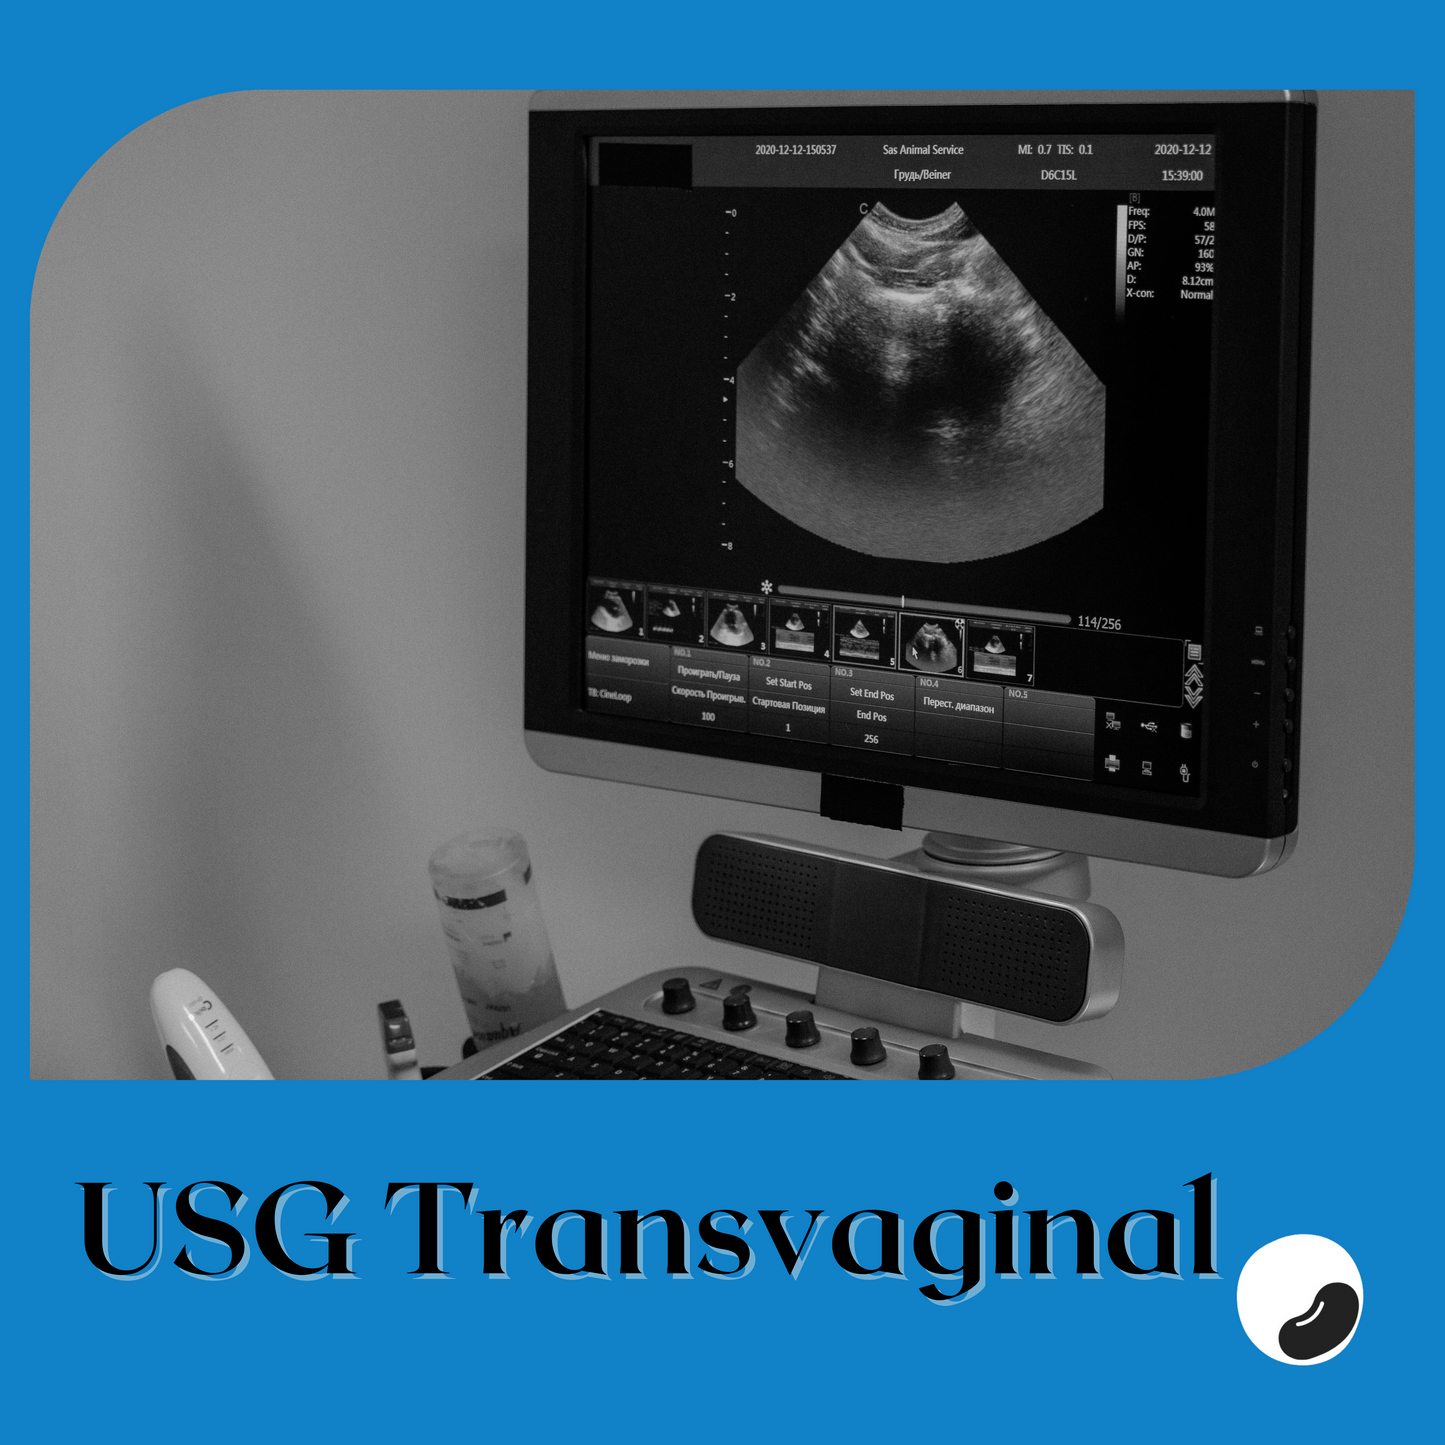 USG Transvaginal Promil - Non Print